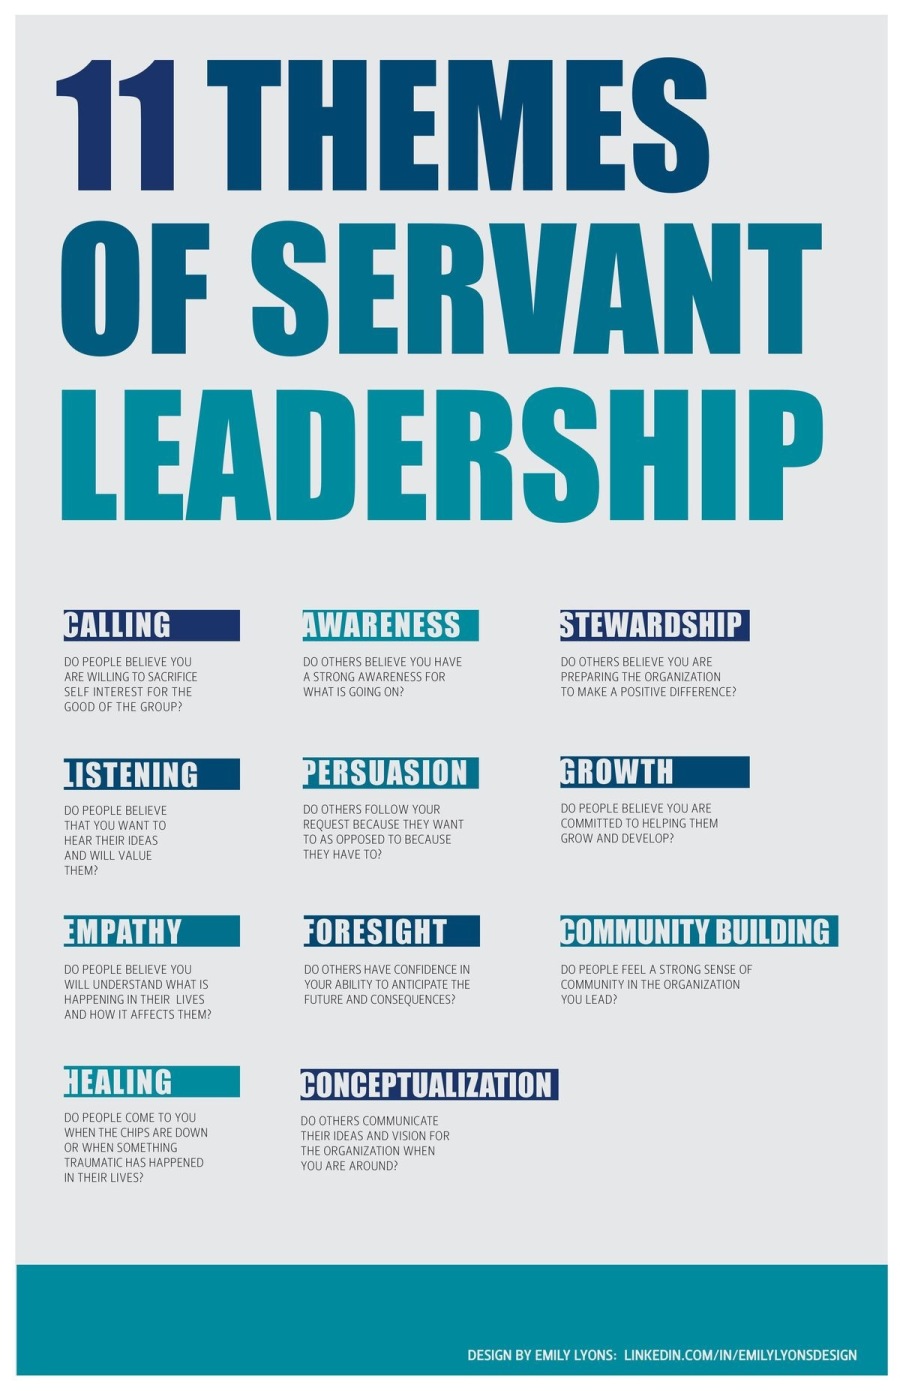 11 THEMES
OF SERVANT
LEADERSHIP

ITs TTIETESE SETHE

   

ITH HITTITE

  

ONCEPTUALIZATION

DESIGN BY EMILY LYONS: LINKEDIN COM/IN/EMILYLYONSDESIGN